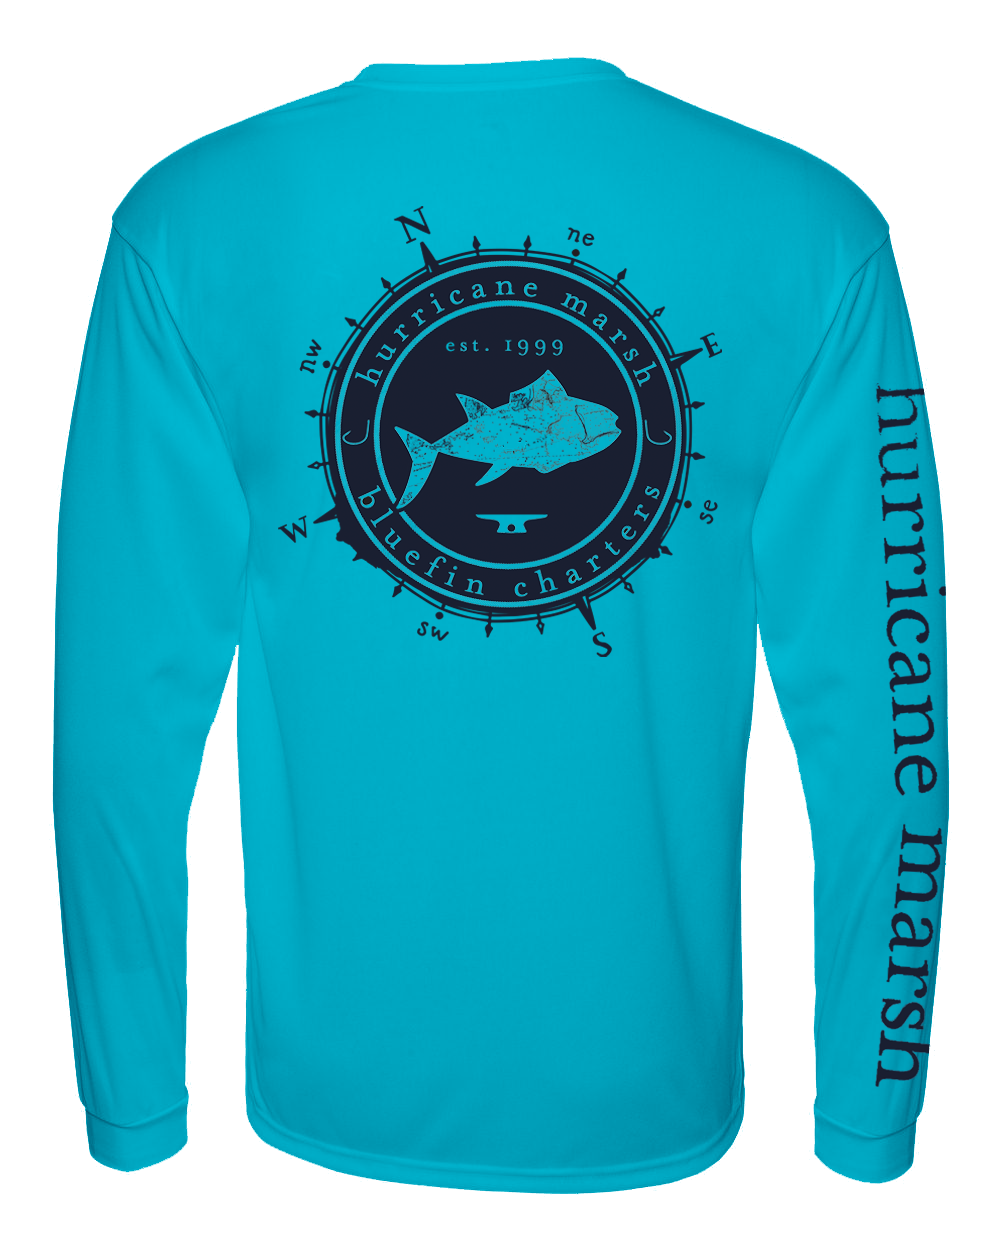 Bluefin Charters Performance Fishing Shirt Large